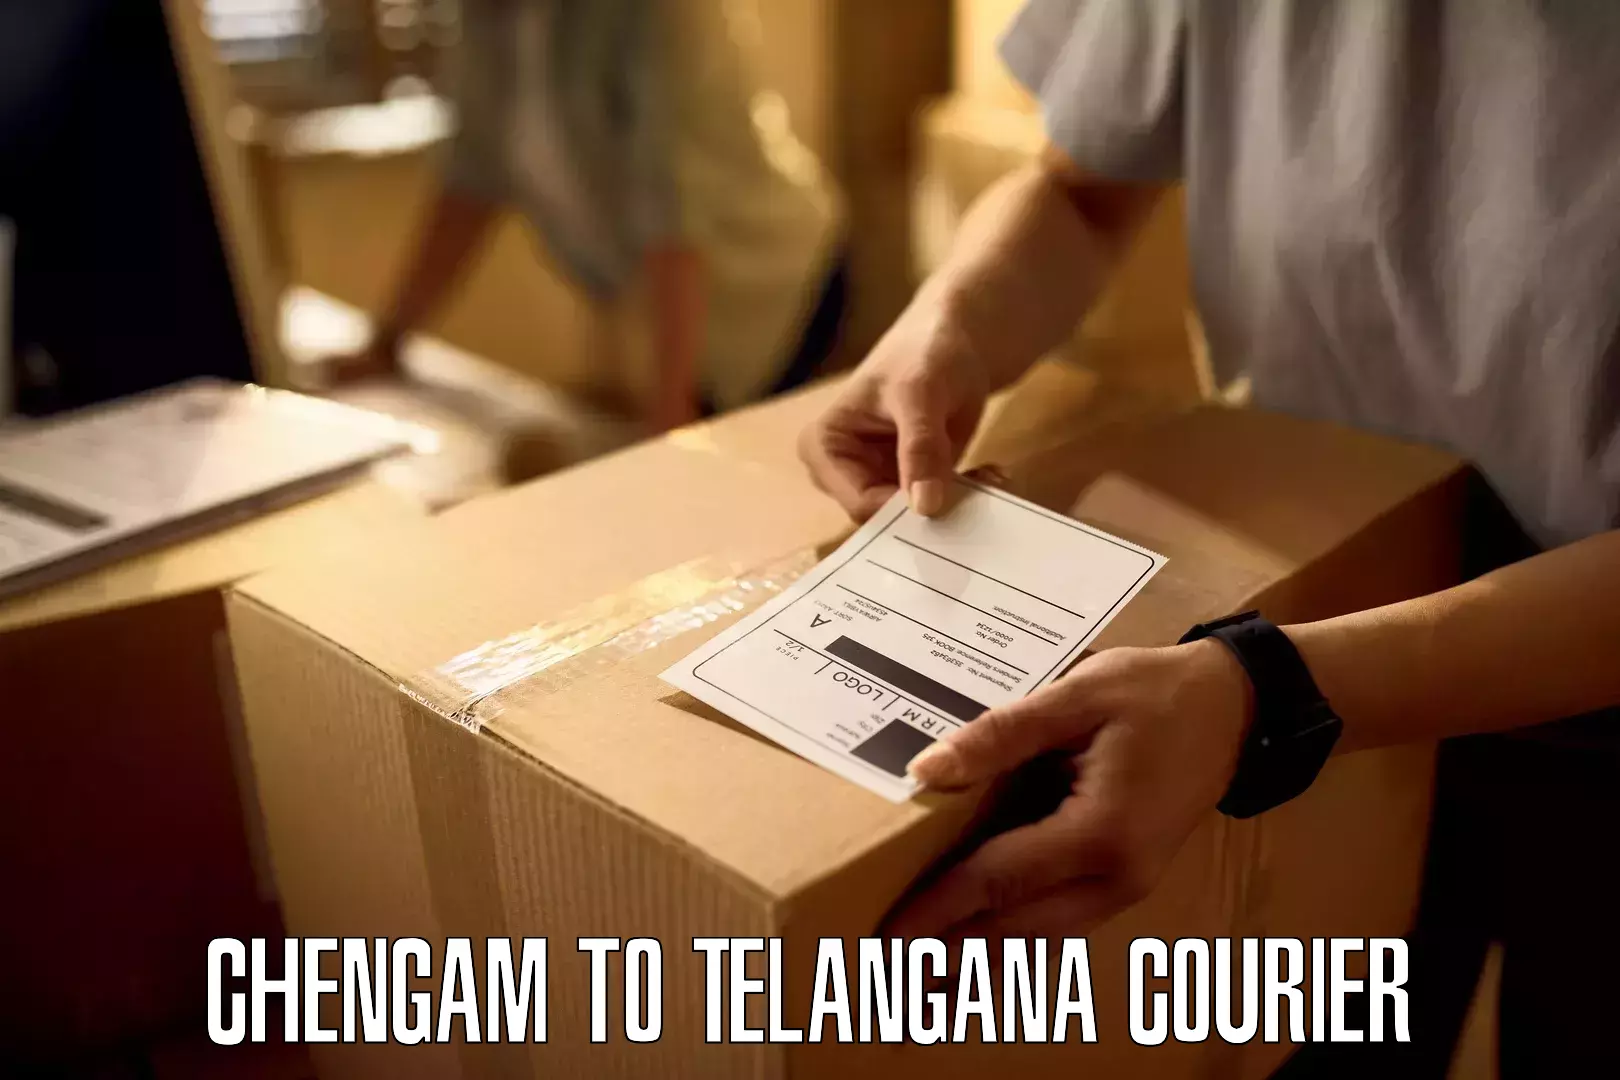 Full-service courier options Chengam to Telangana